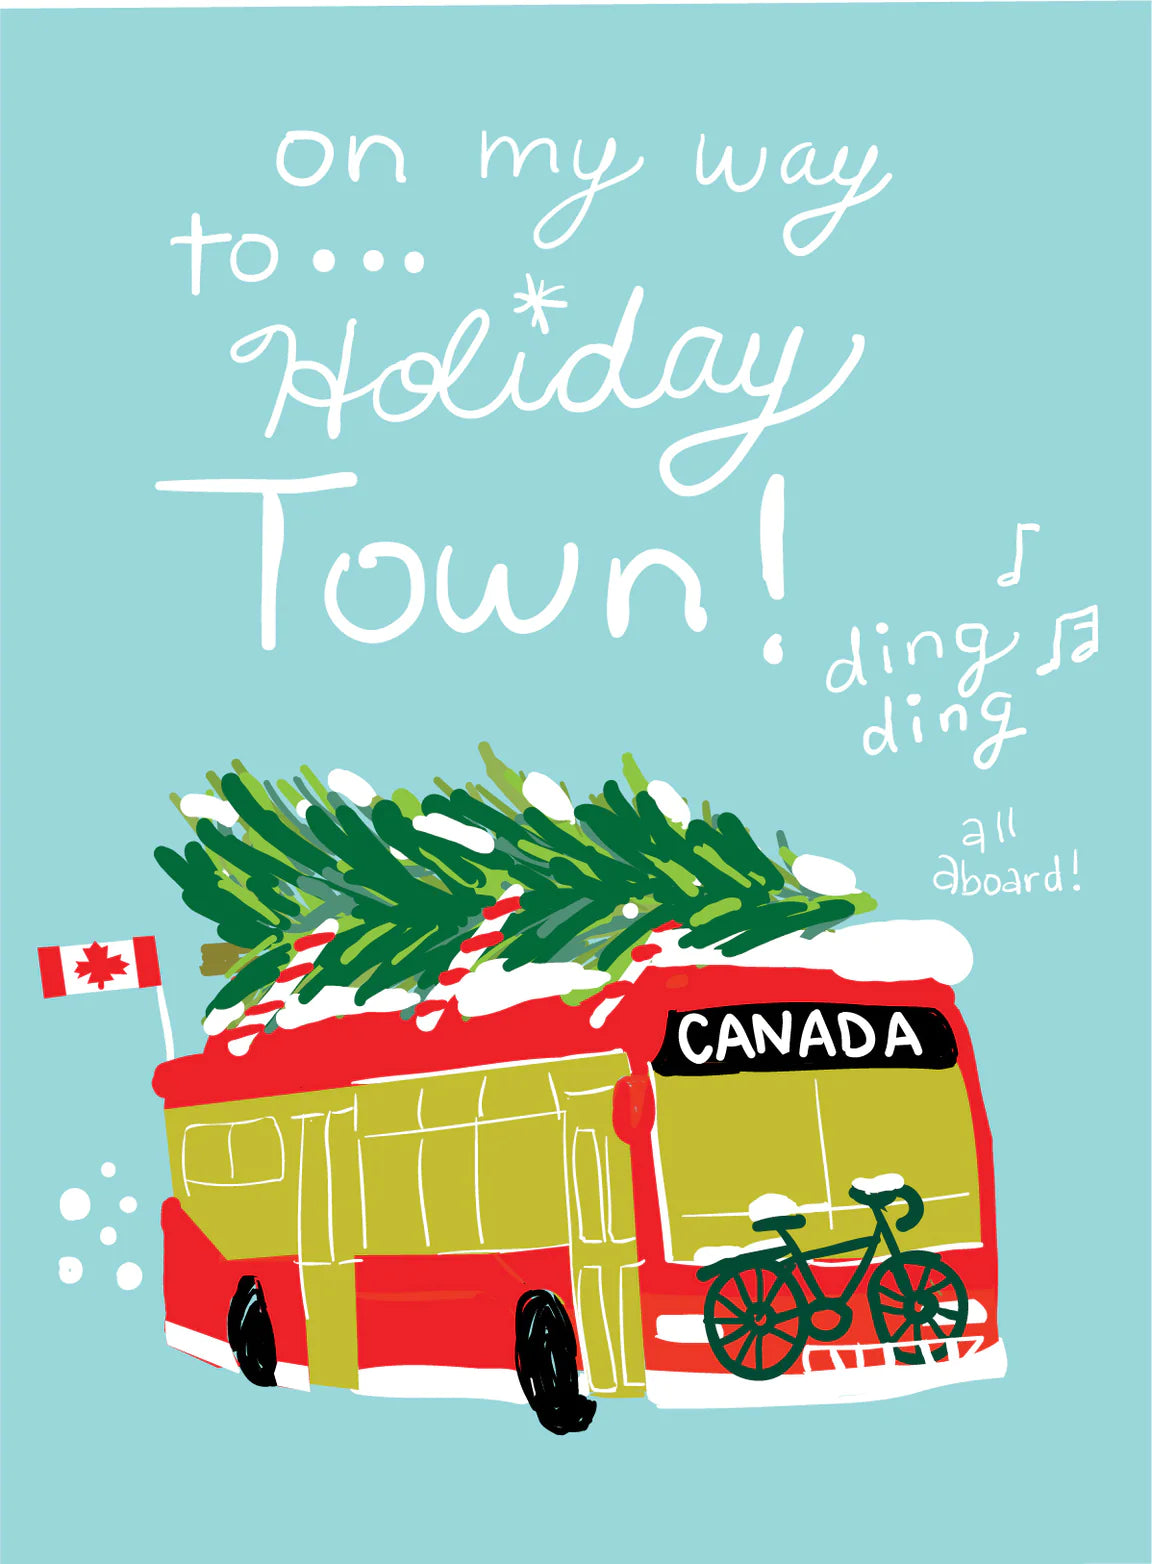 Toronto Holiday Bus Card